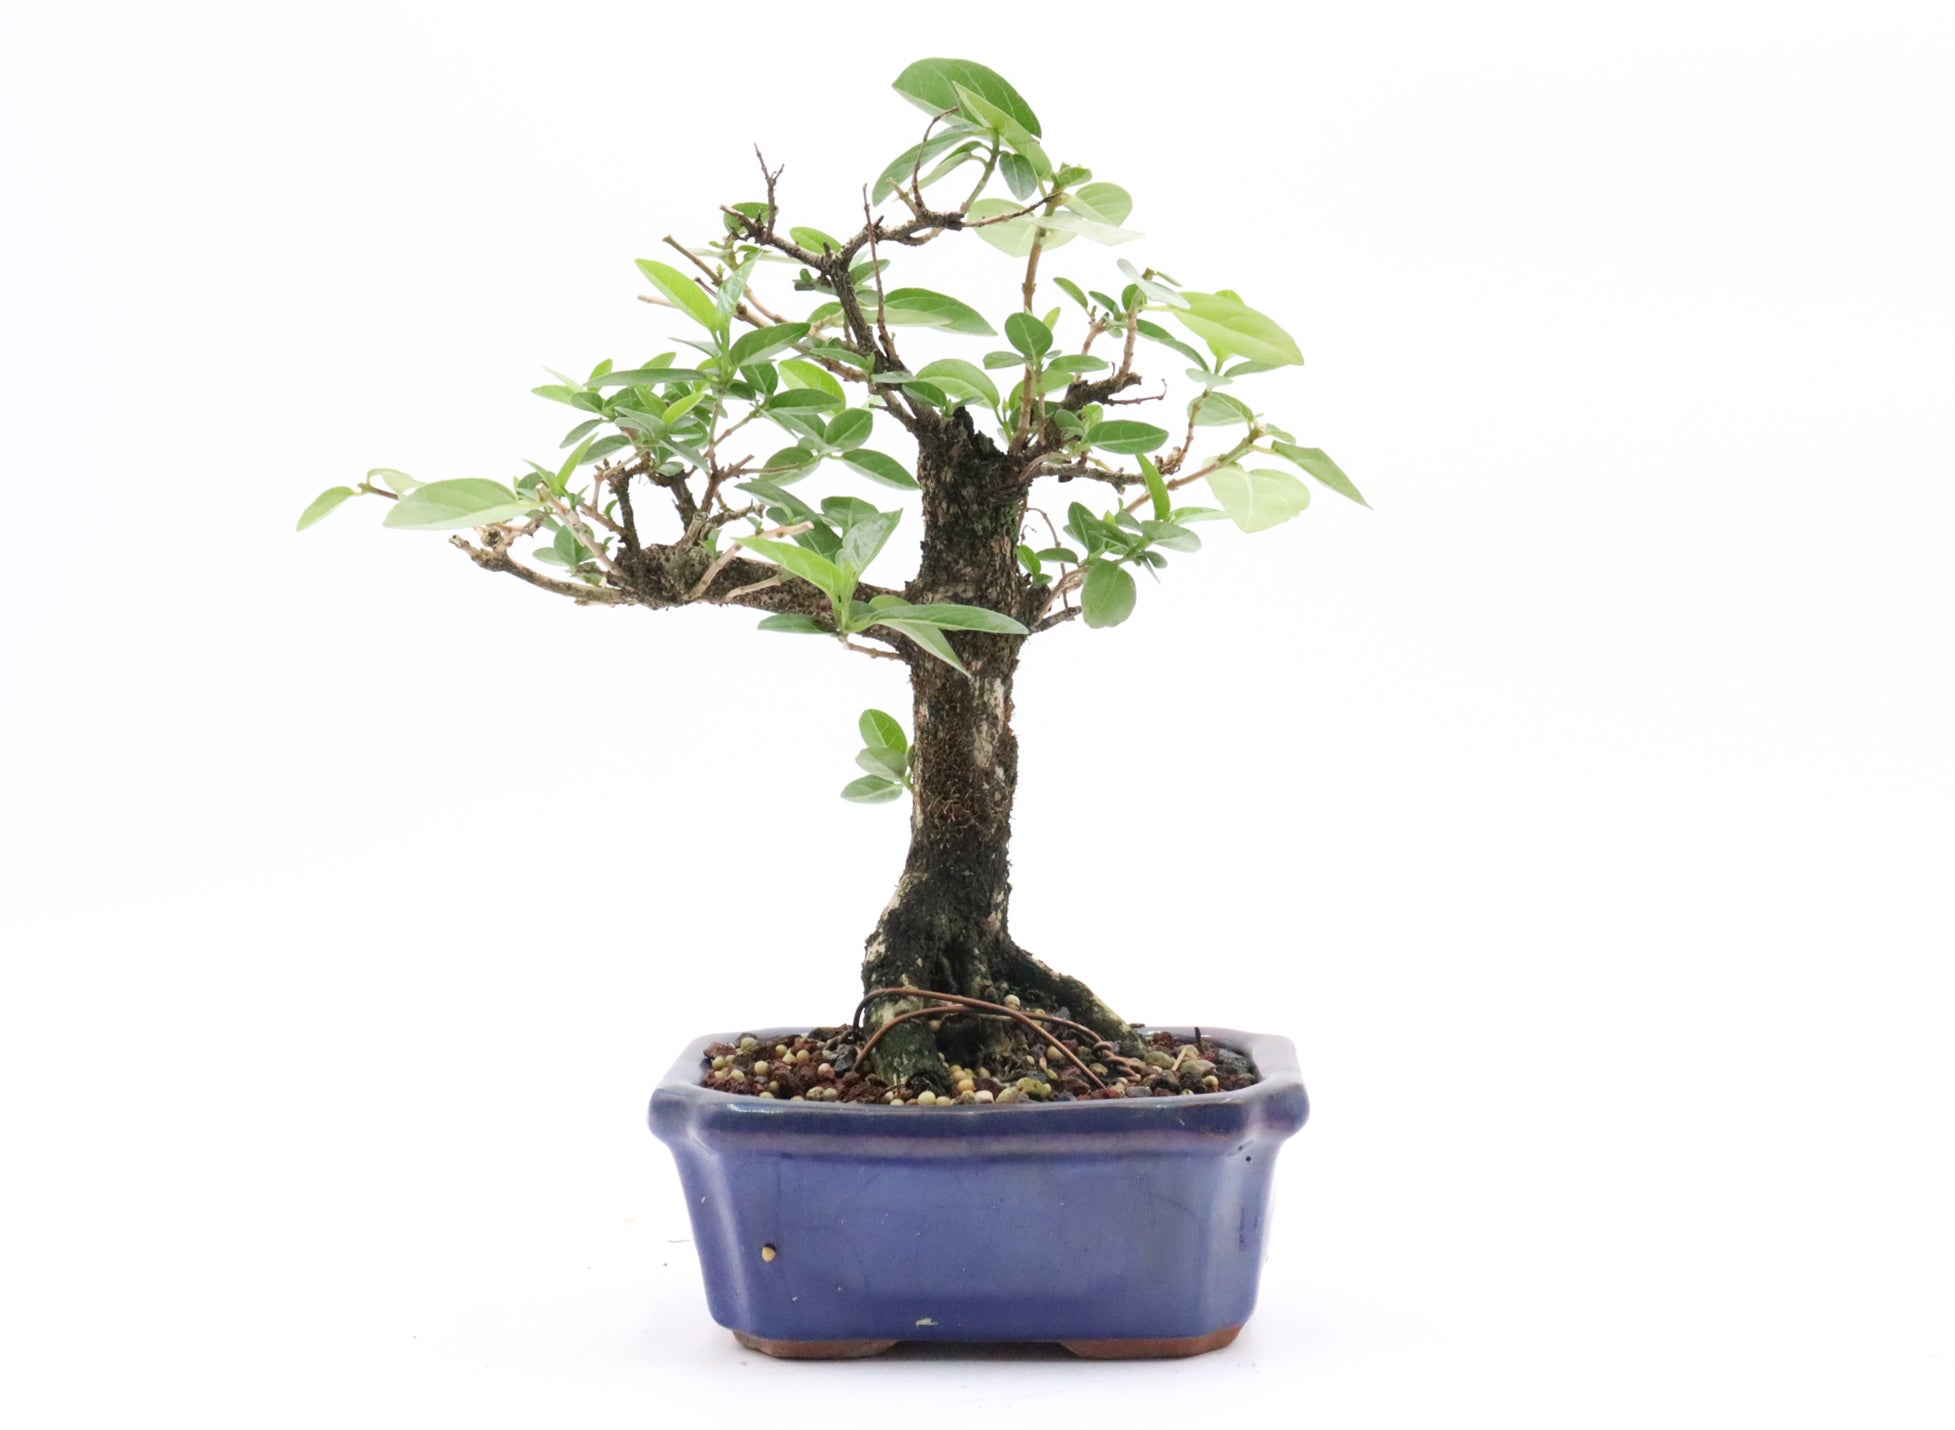 Premna Microphylla in bonsai soil